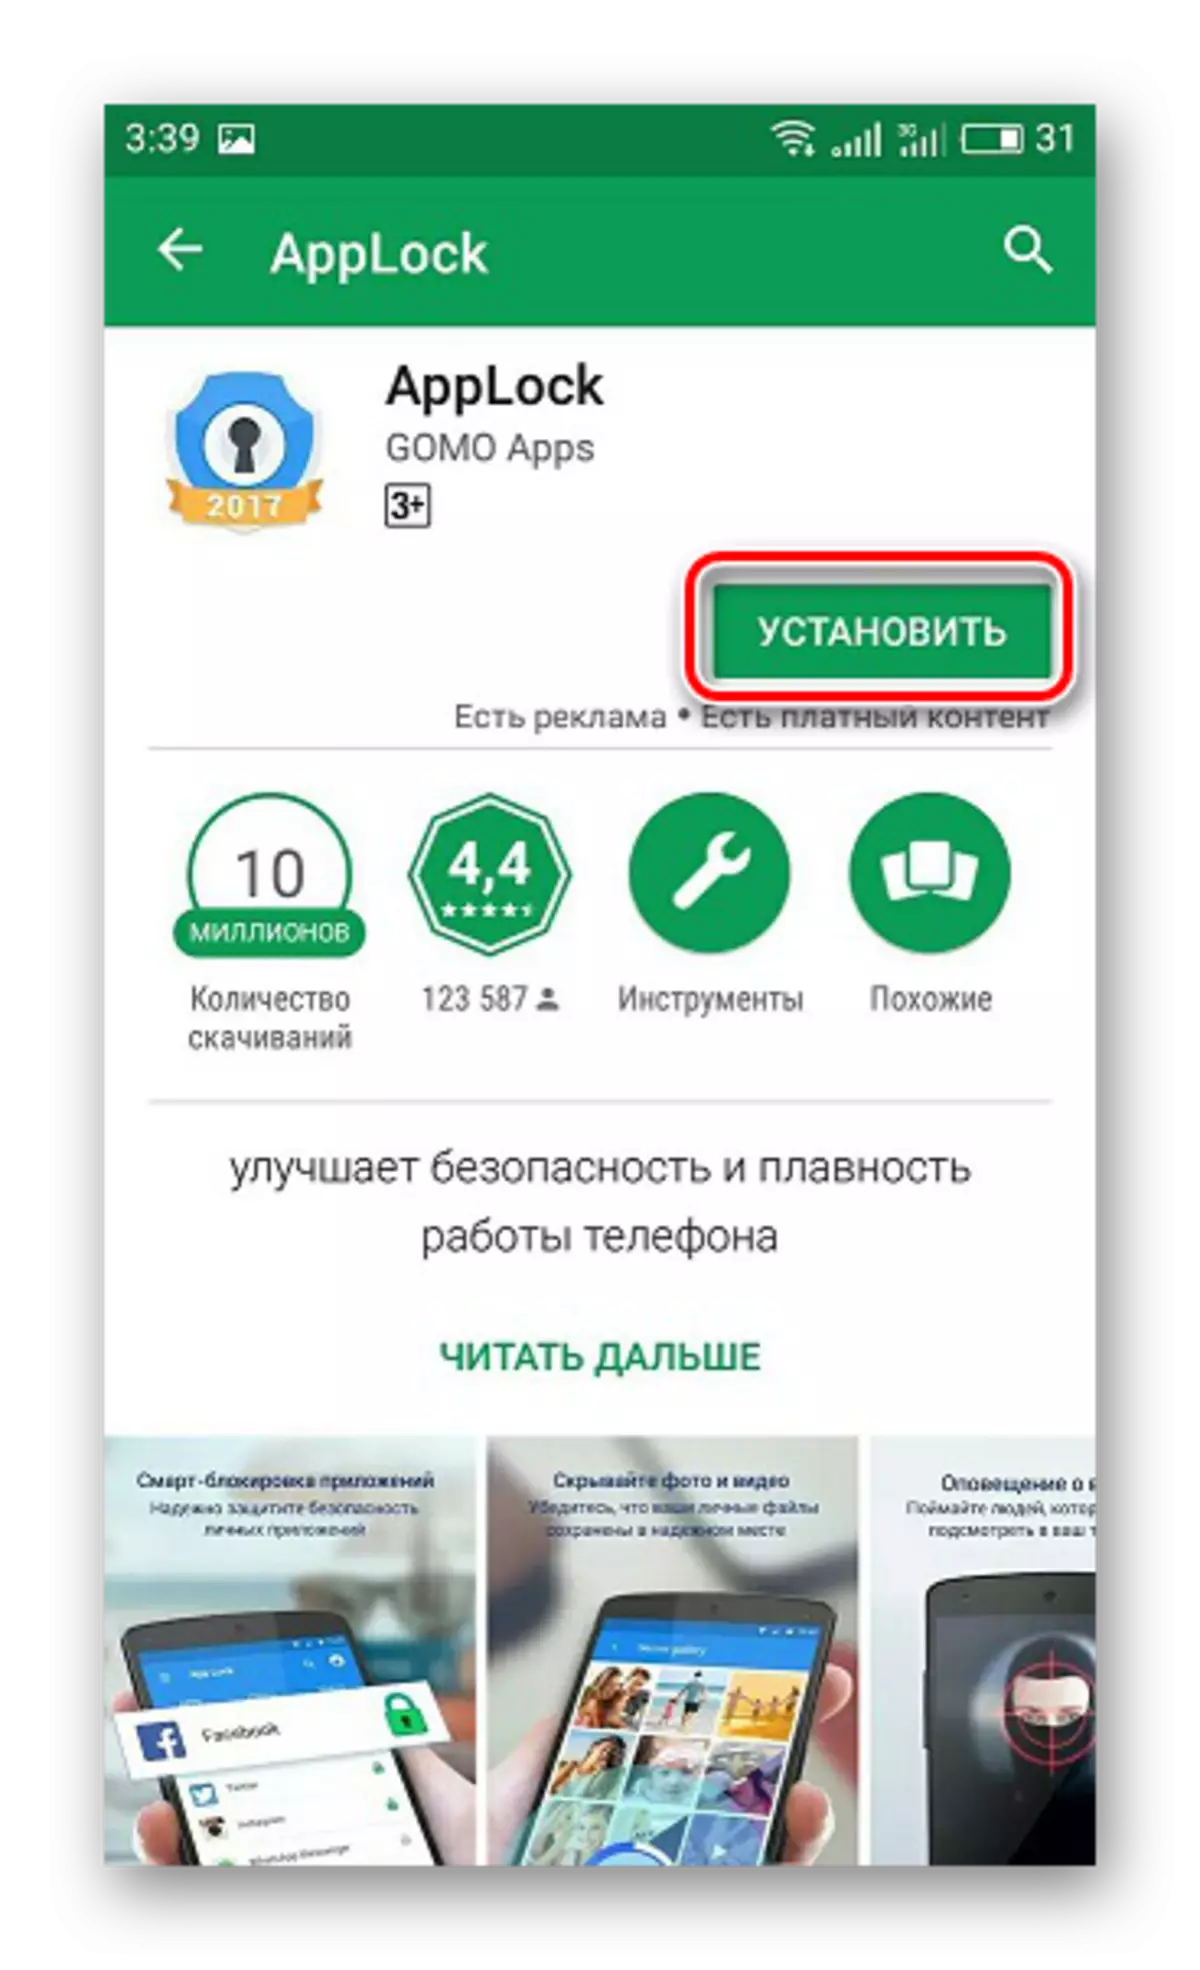 Download AppLock karo Pasar Google Play